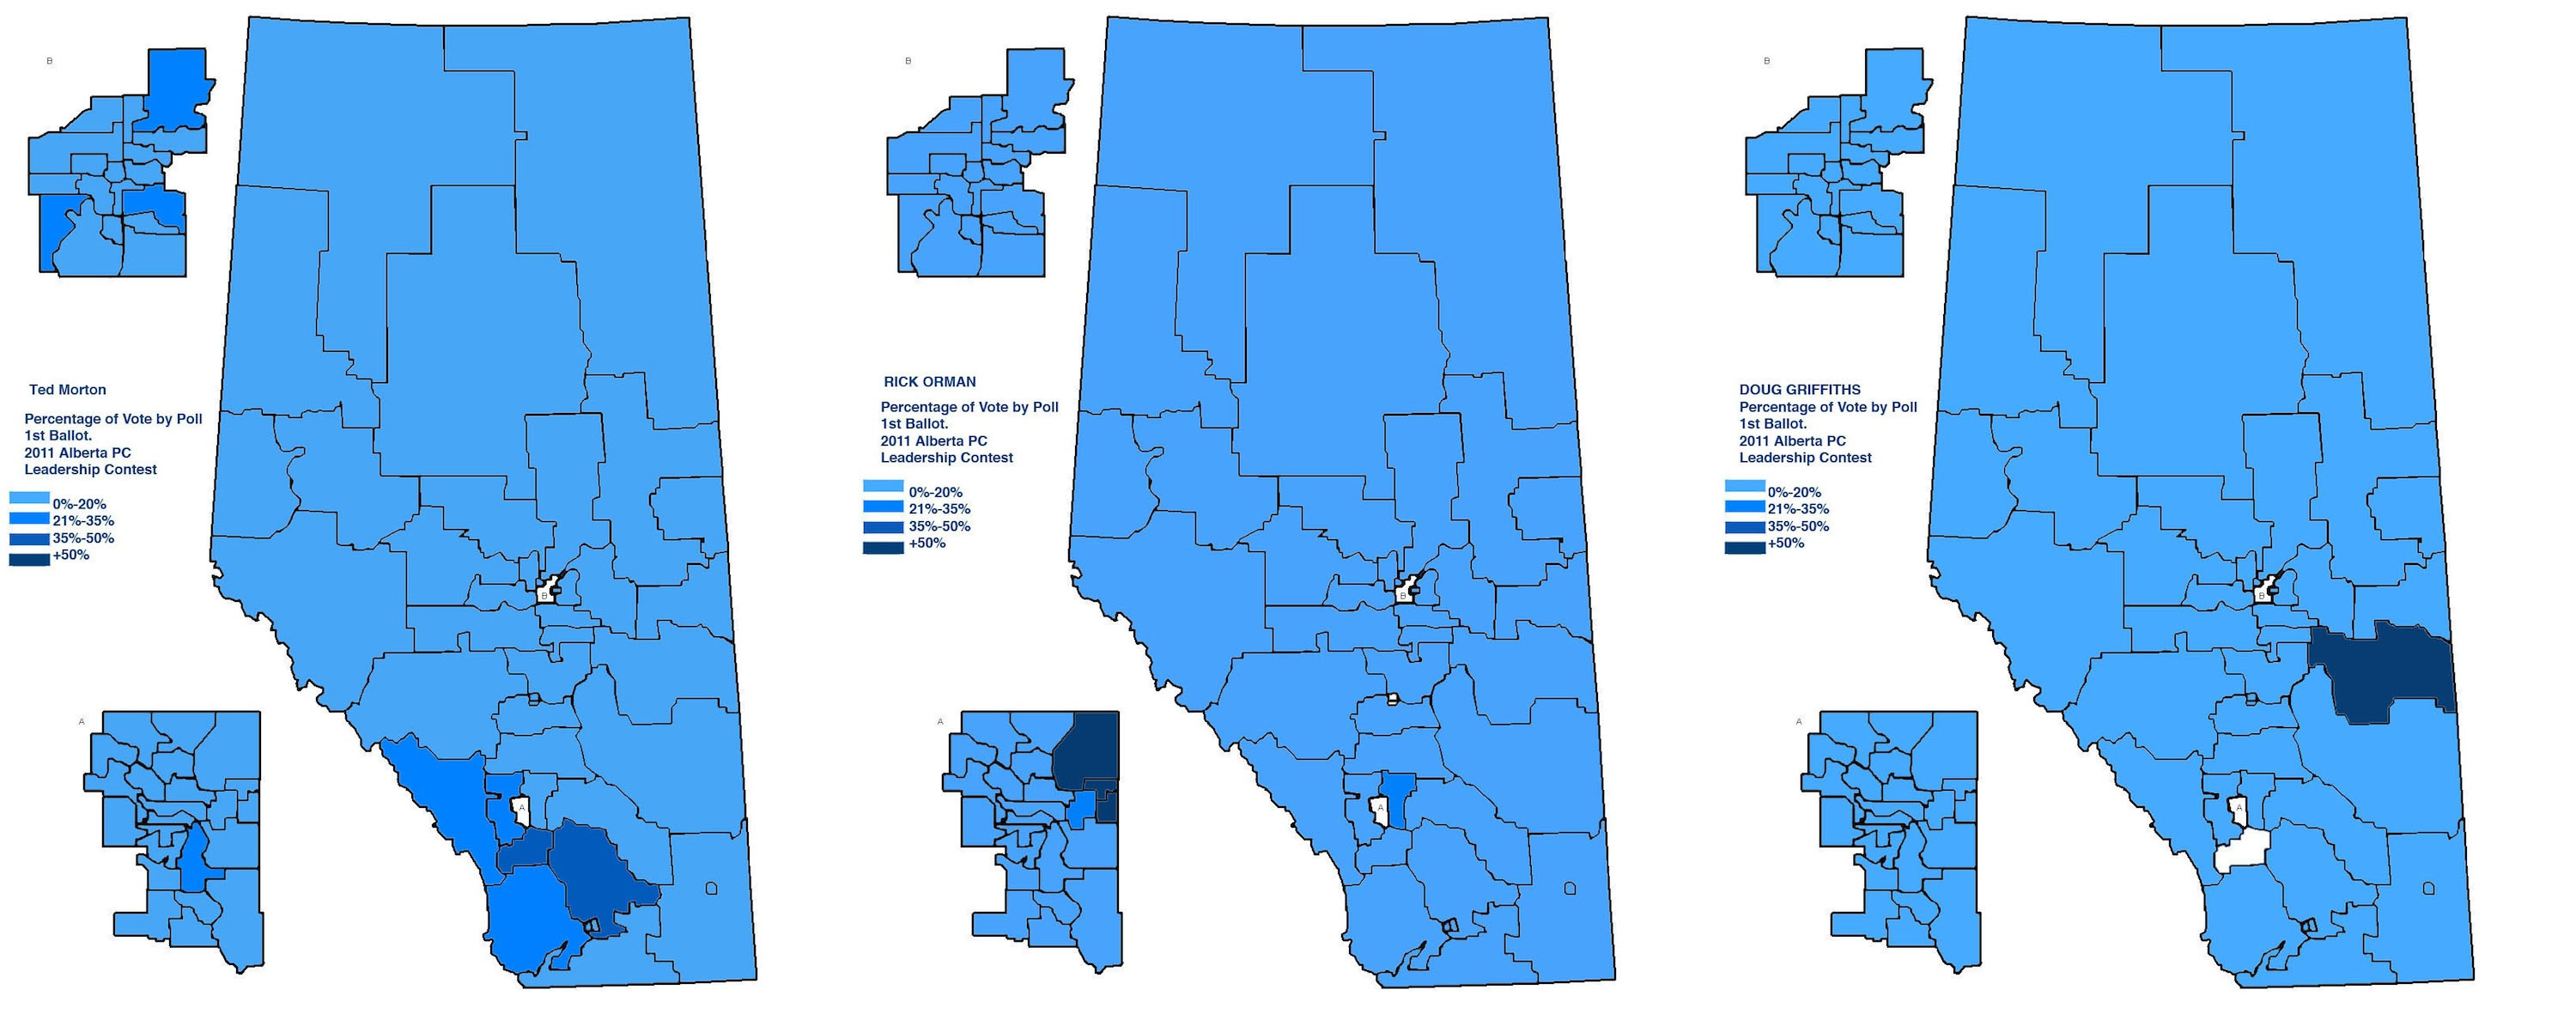 Ted Morton-Rick Orman-Doug Griffiths Alberta PC leadership vote